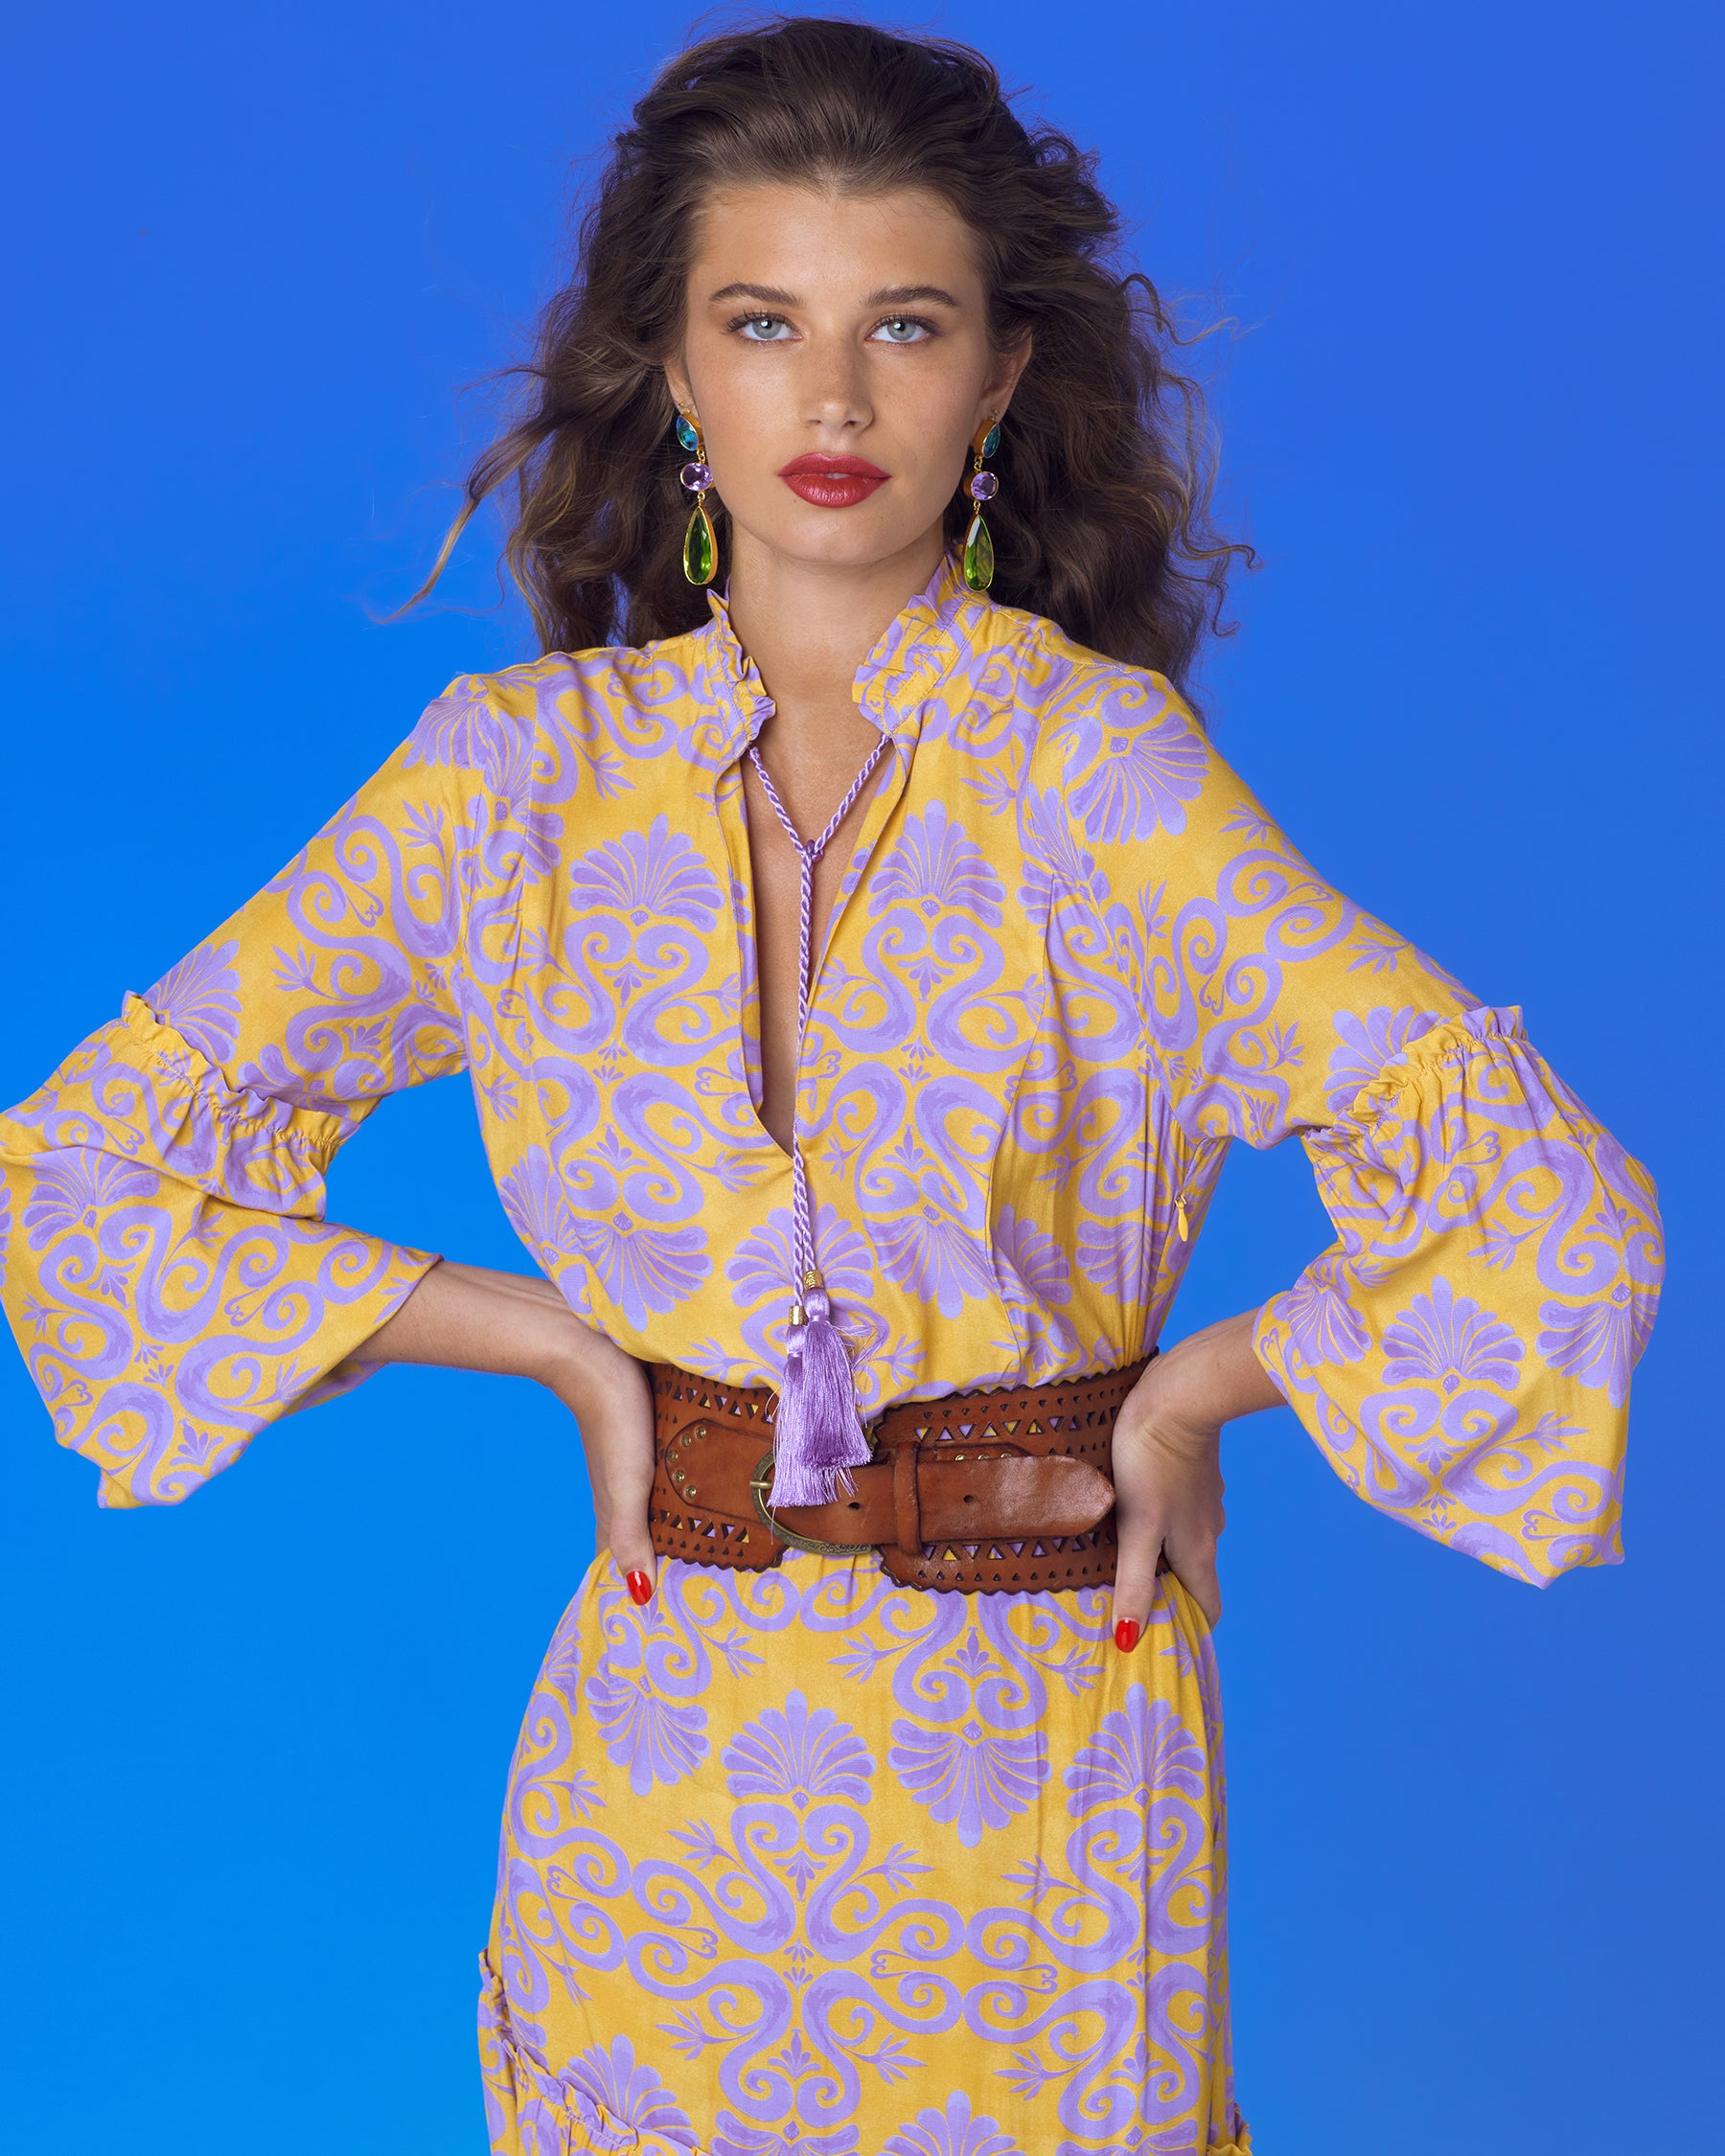 Sabina Maxi Dress in Mediterranean Swirl Motif=Portrait with hands on hips